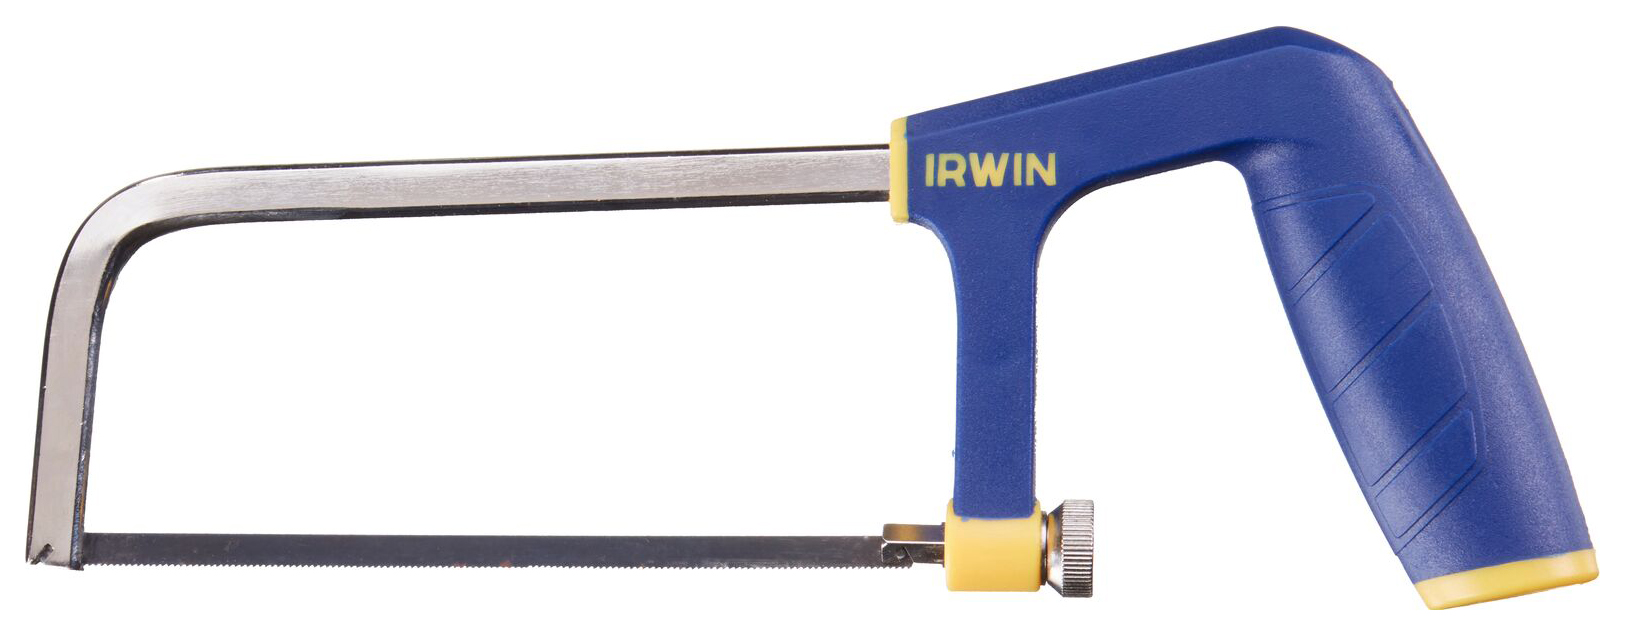 Image of Irwin 10504409 14TPI Junior Hacksaw - 6in / 150mm